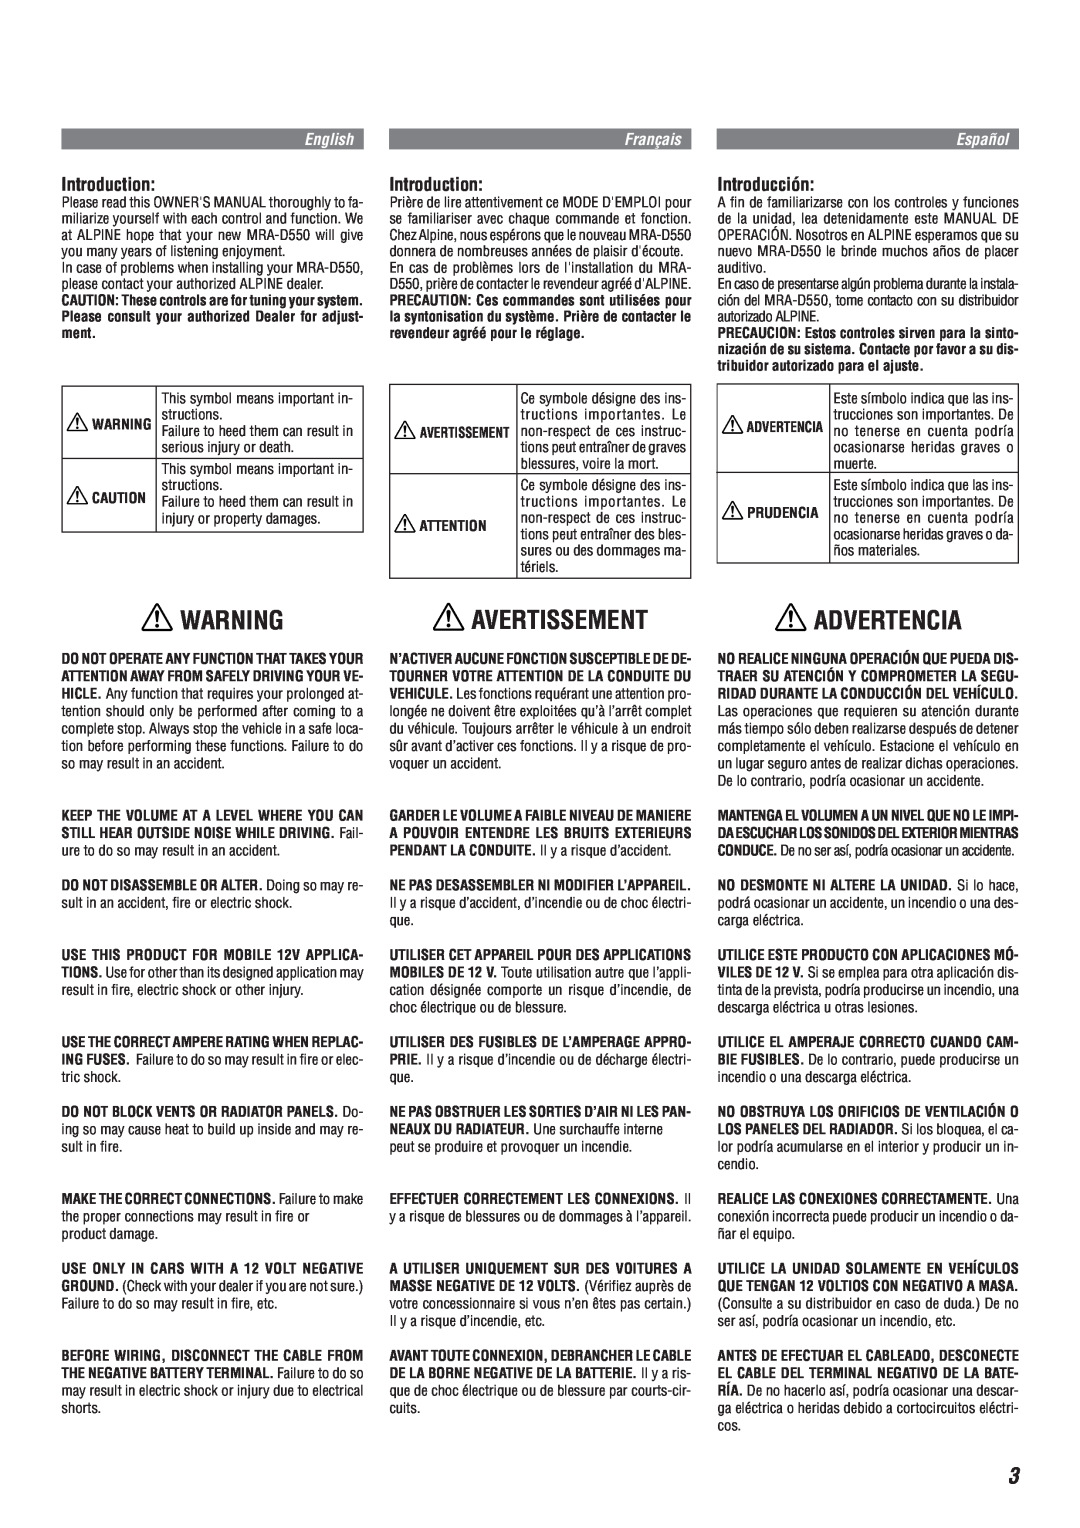 Alpine MRA-D550 owner manual Avertissement, Advertencia, Introduction, Introducción, English, Français, Español 